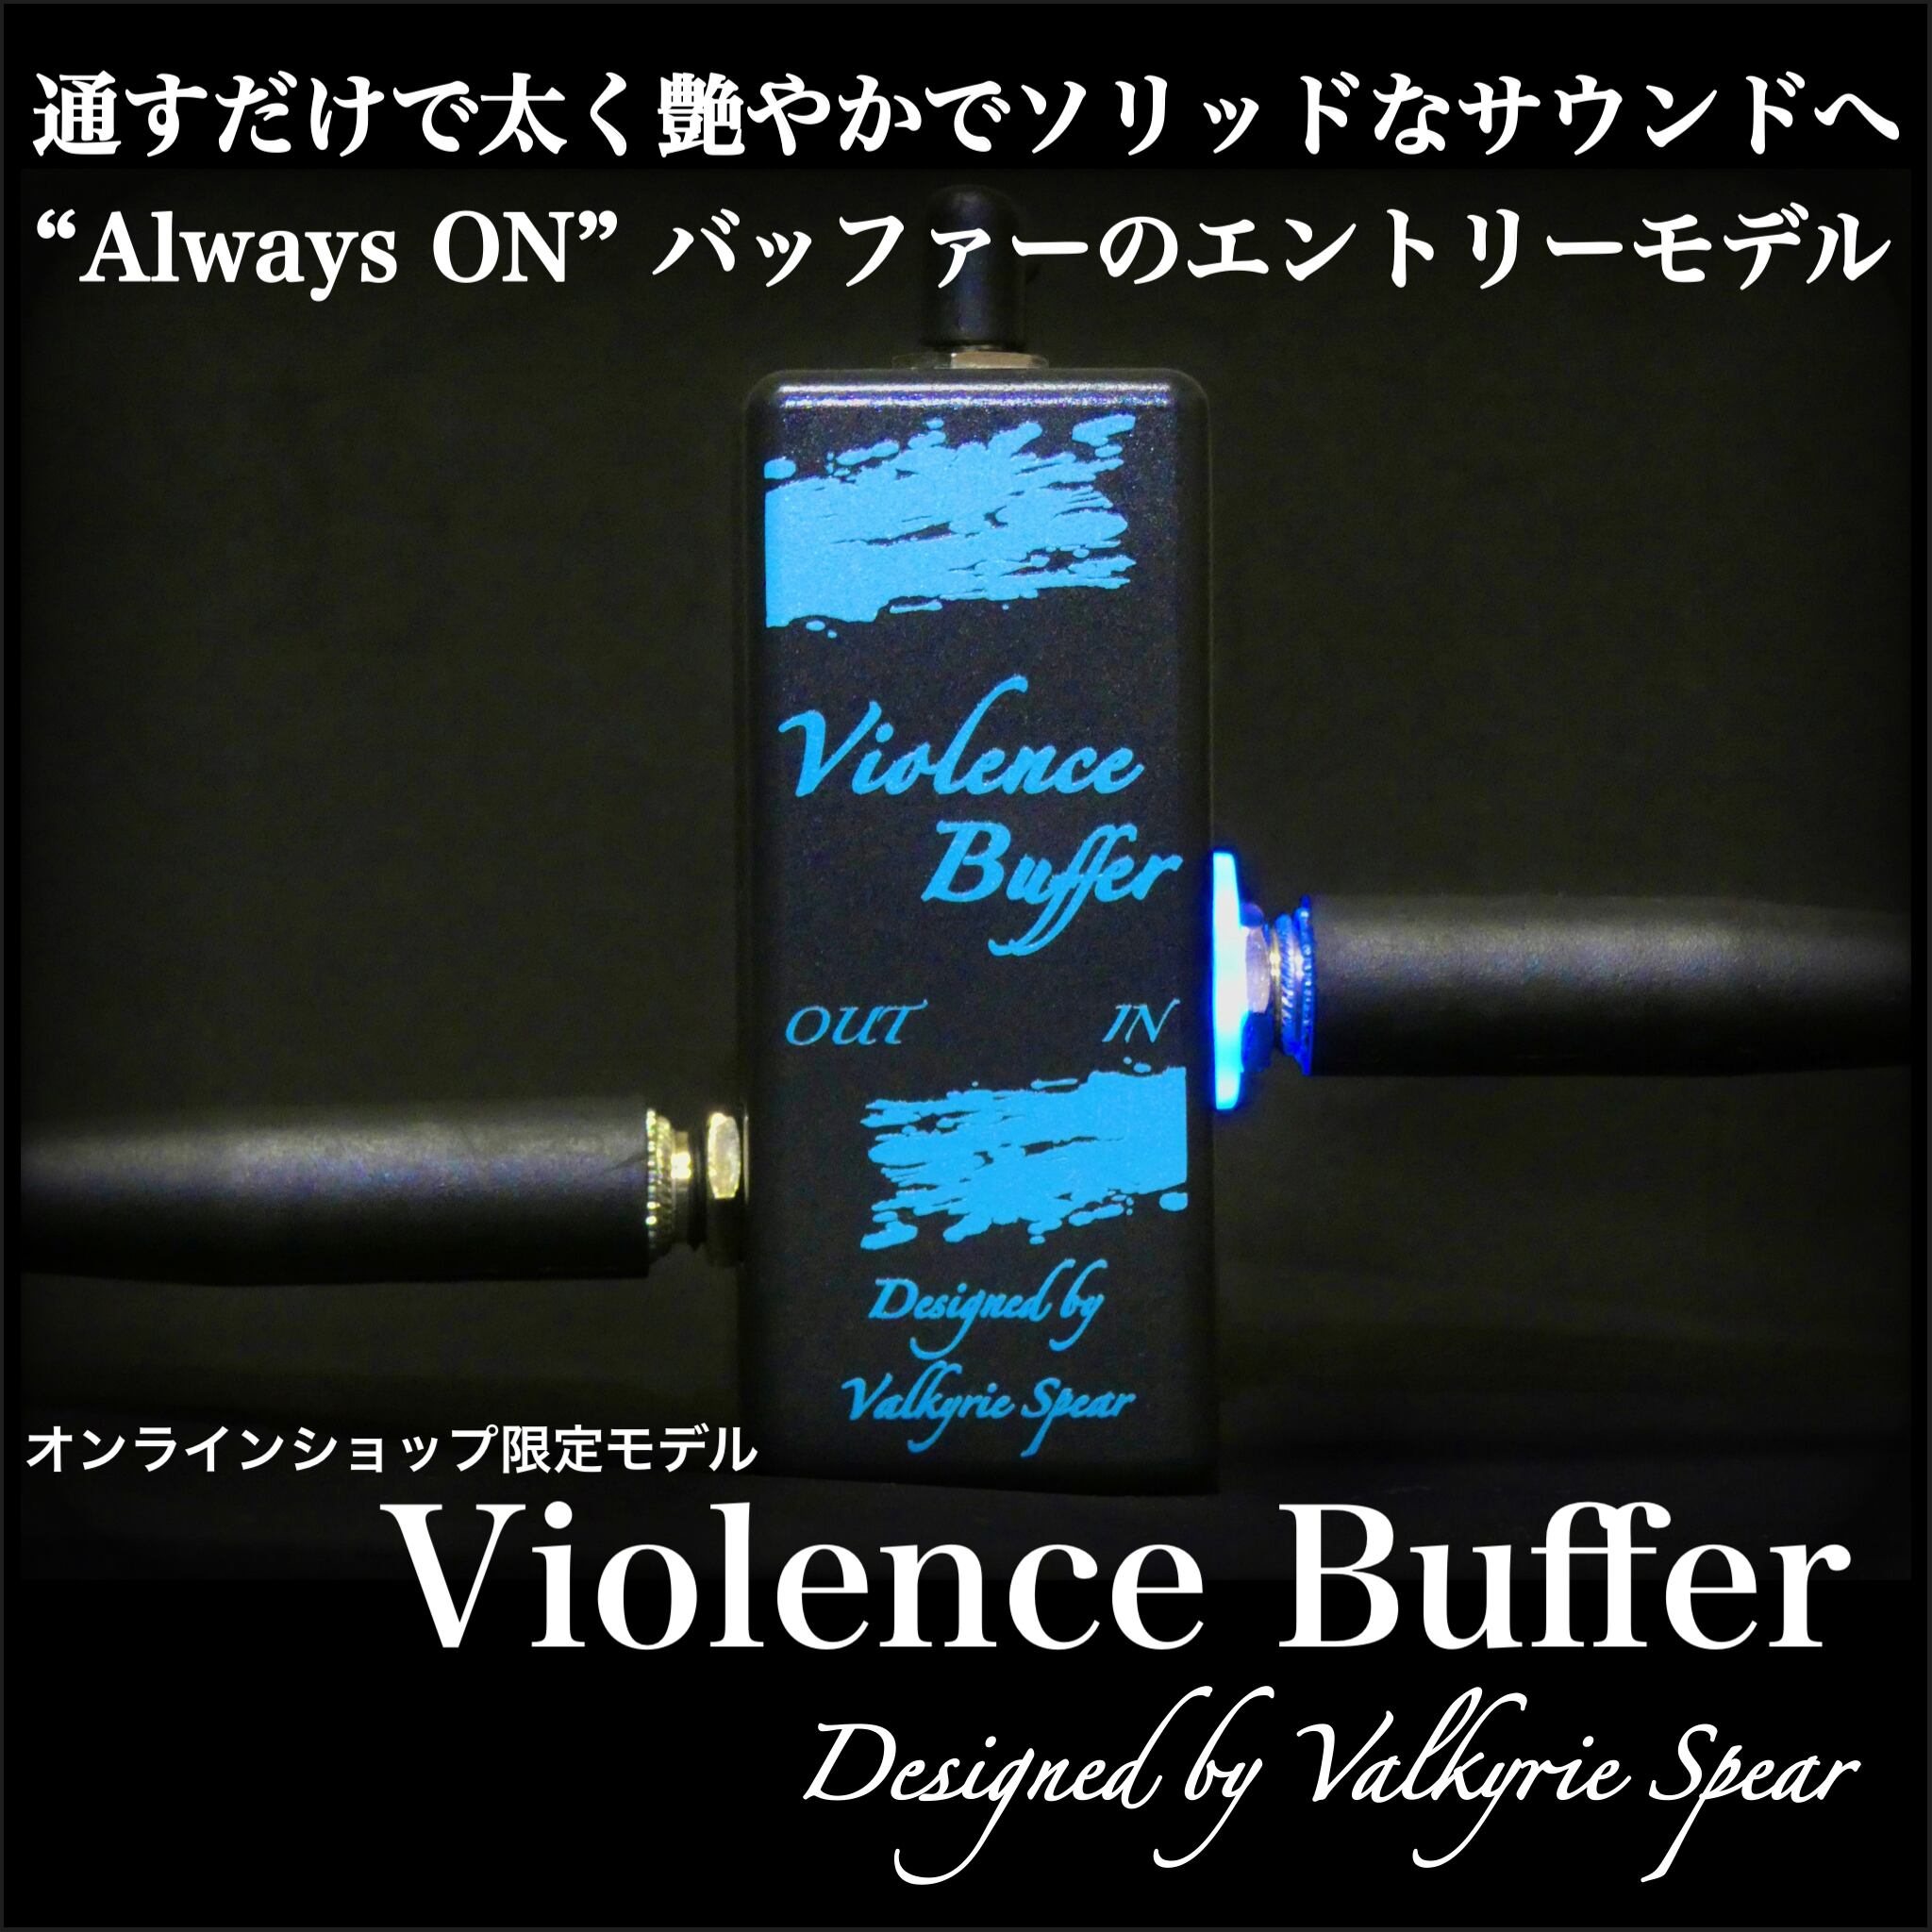 ValkyrieSpear violence booster MK1 - 通販 - gofukuyasan.com